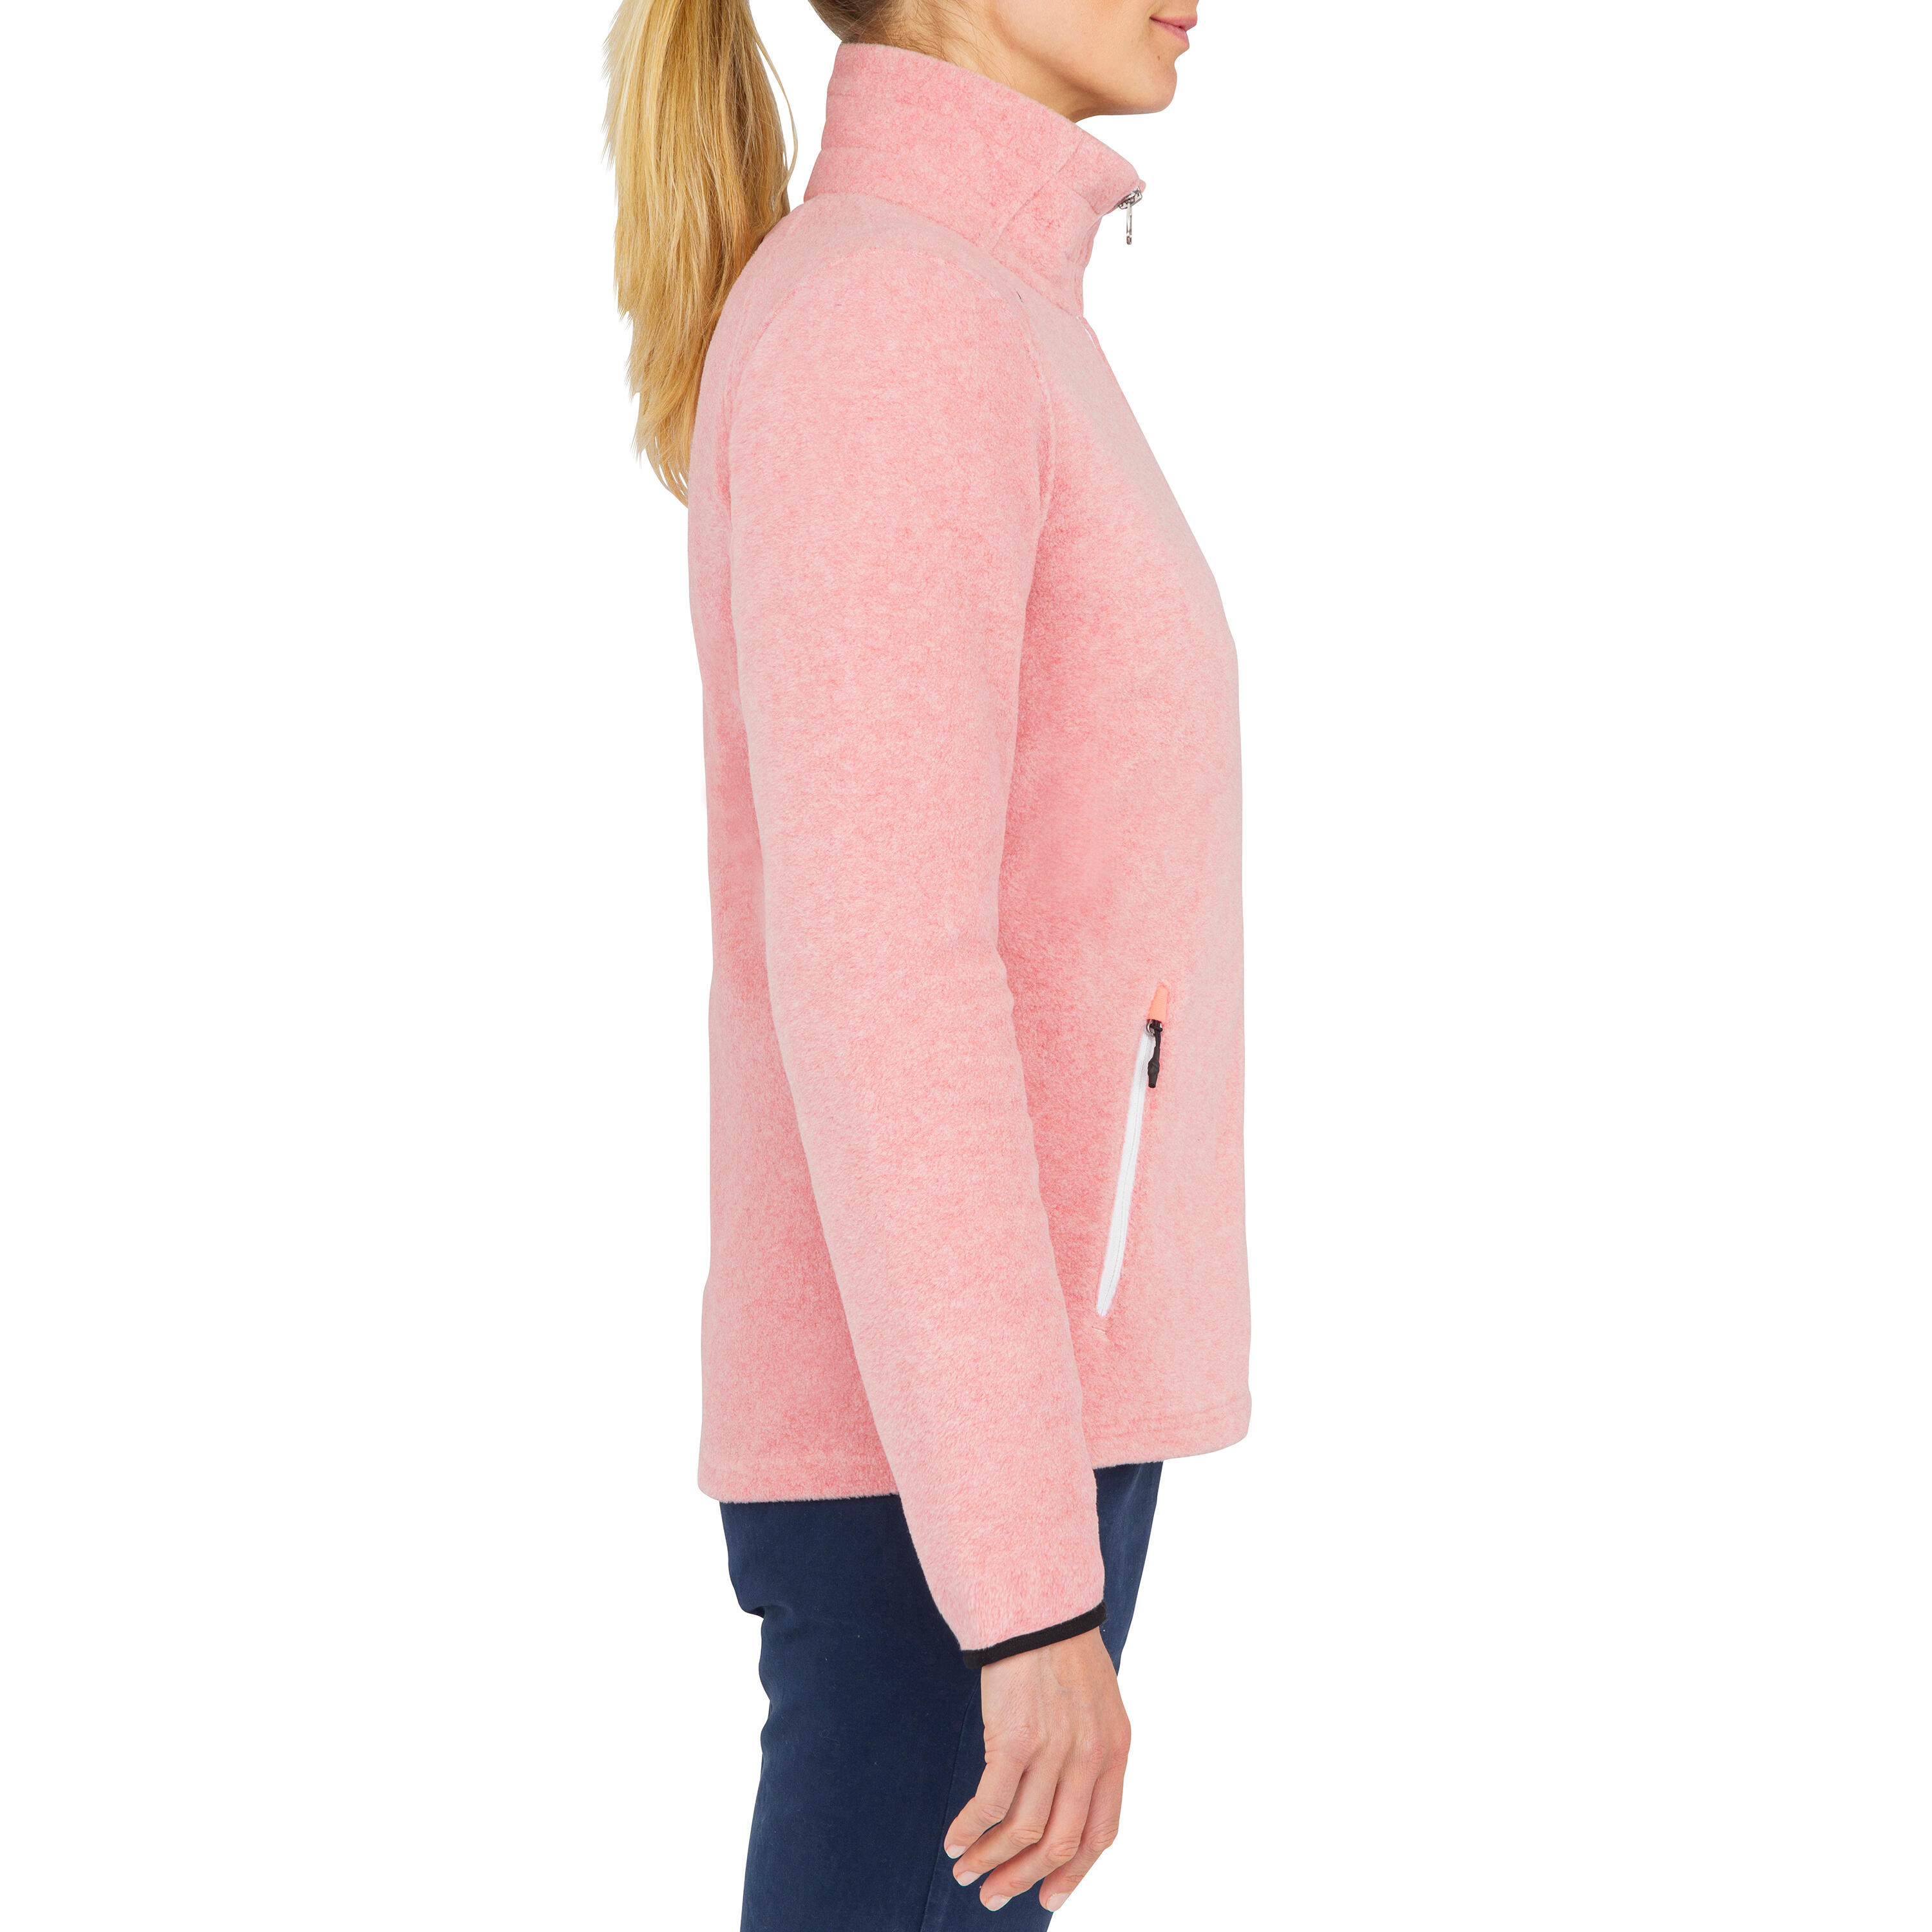 Women warm fleece sailing jacket 100 - Light rose 4/9